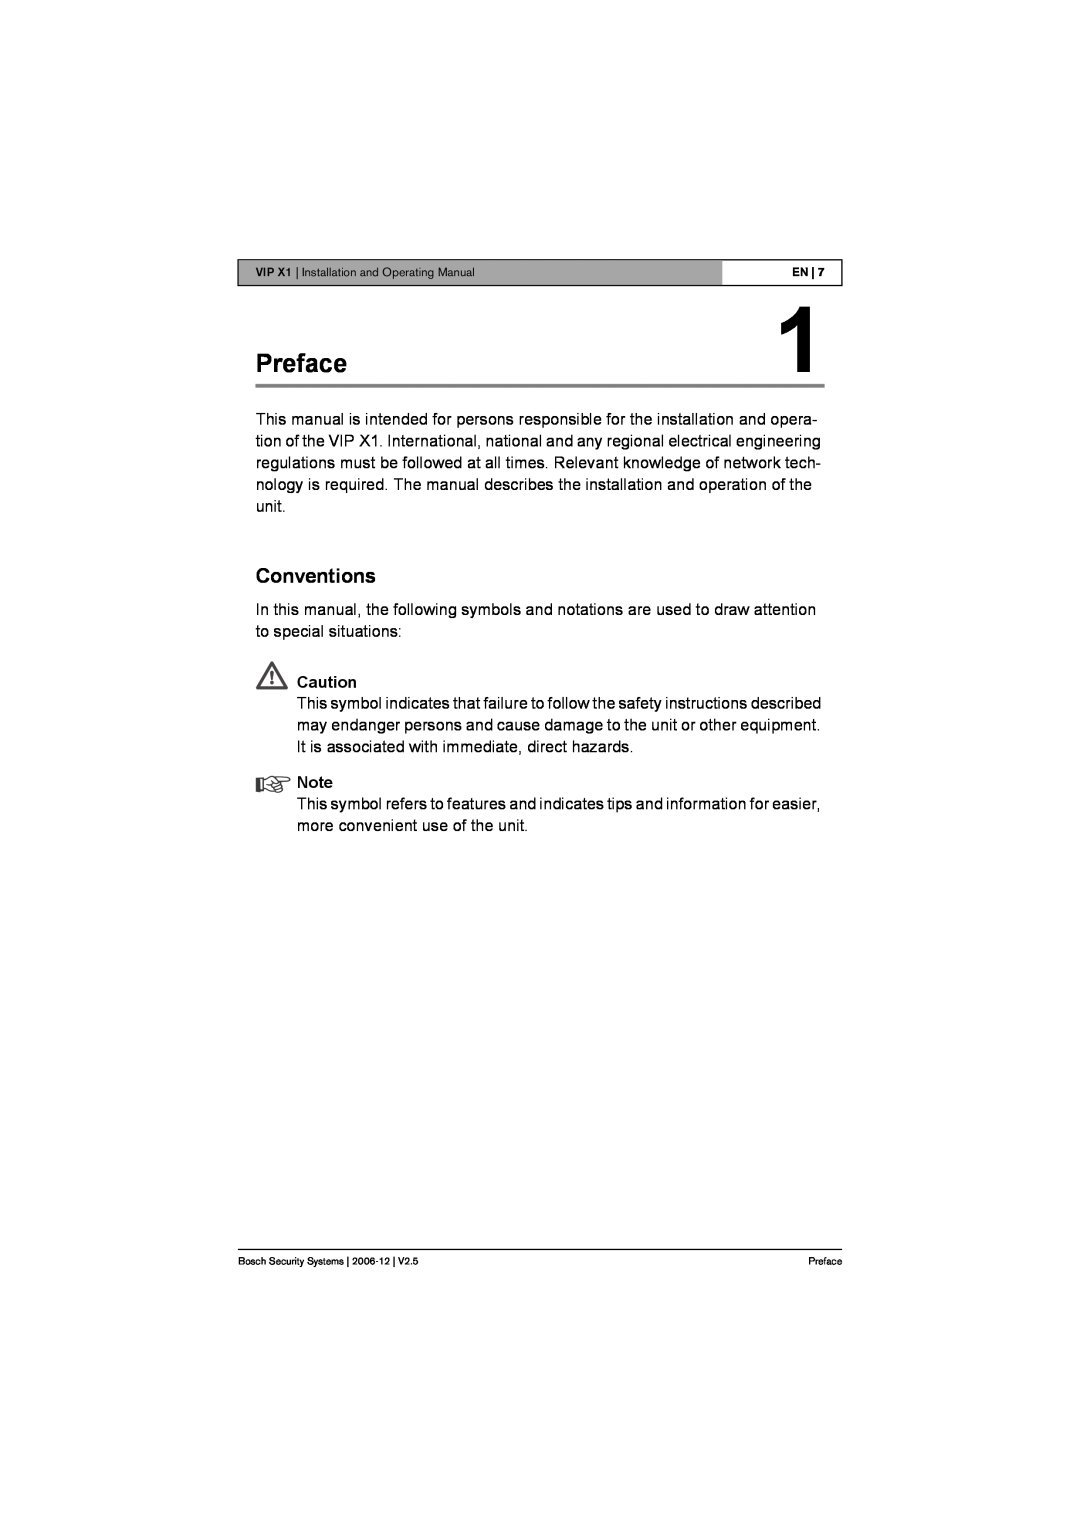 Bosch Appliances VIP X1 manual Preface, Conventions 